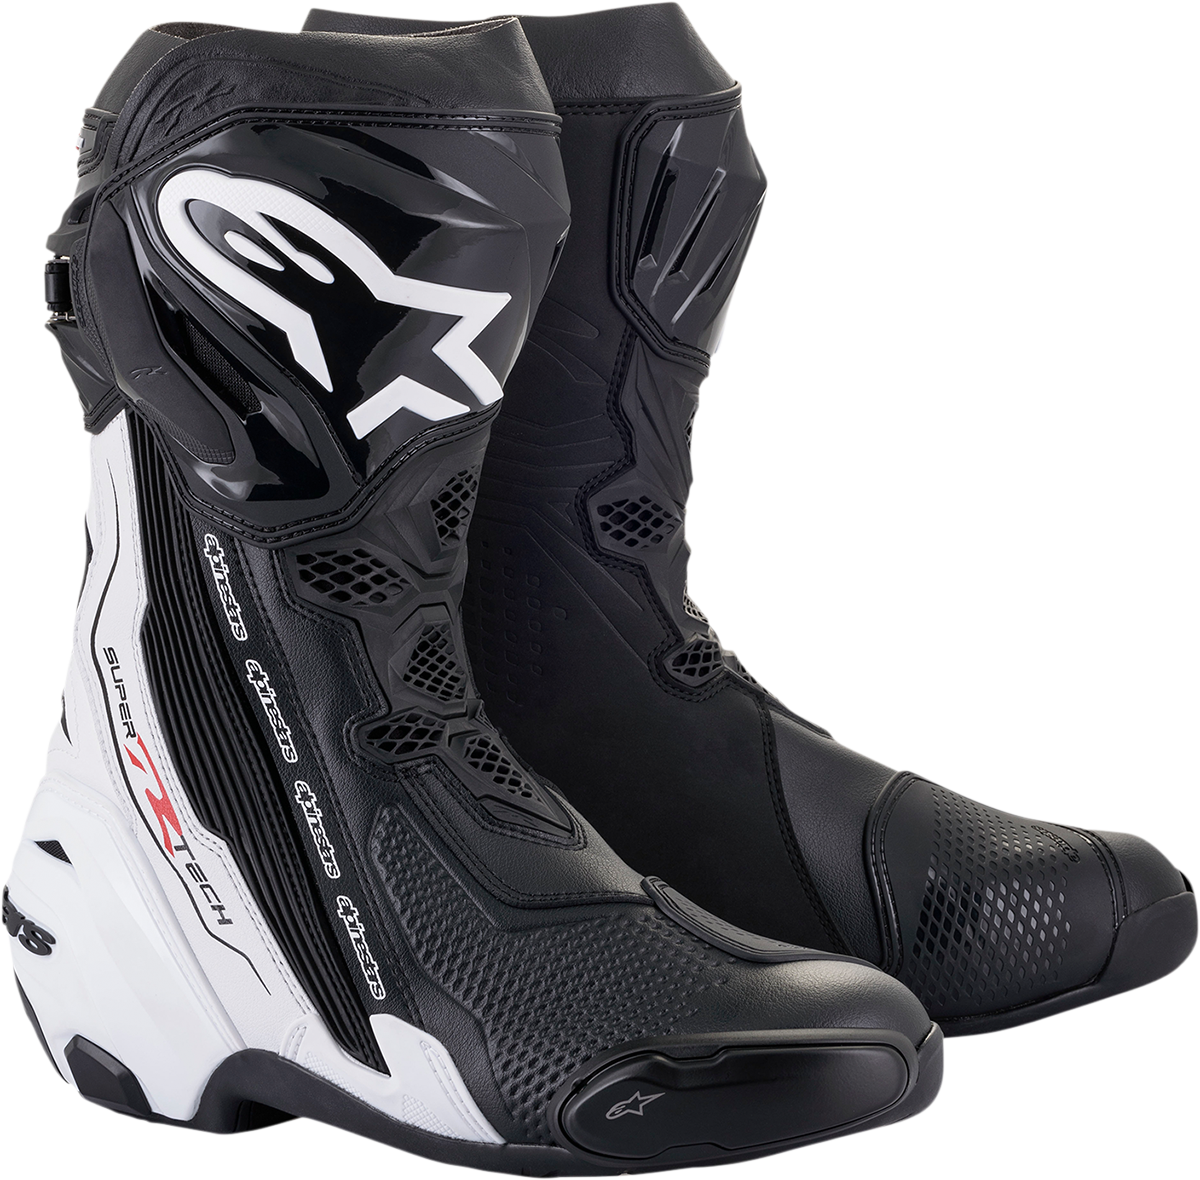 ALPINESTARS Supertech R Boots - Black/White - US 12.5 / EU 48 2220021-12-48